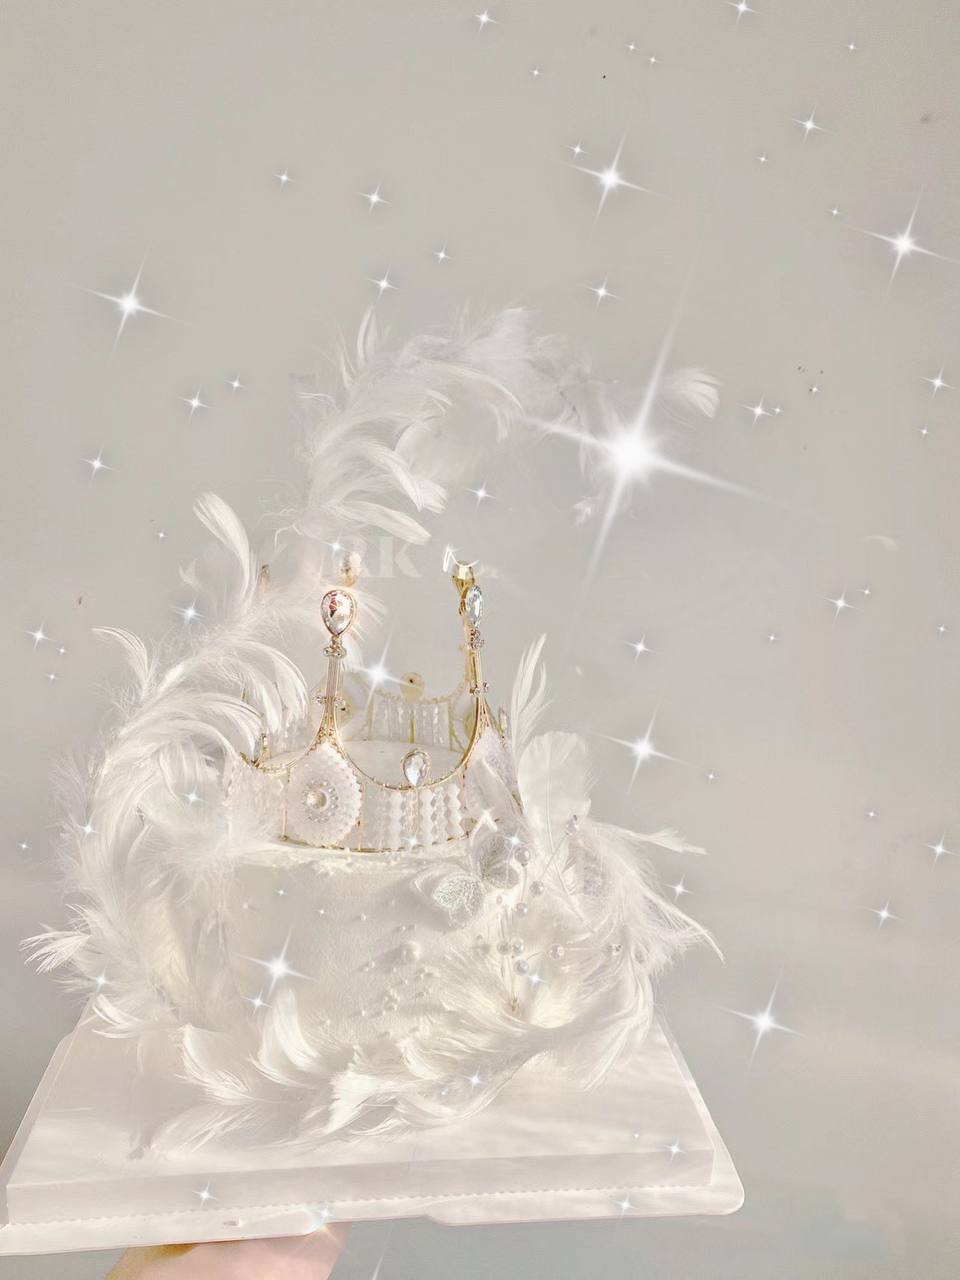 [Promo] Dreamy White Gold Crown Cake